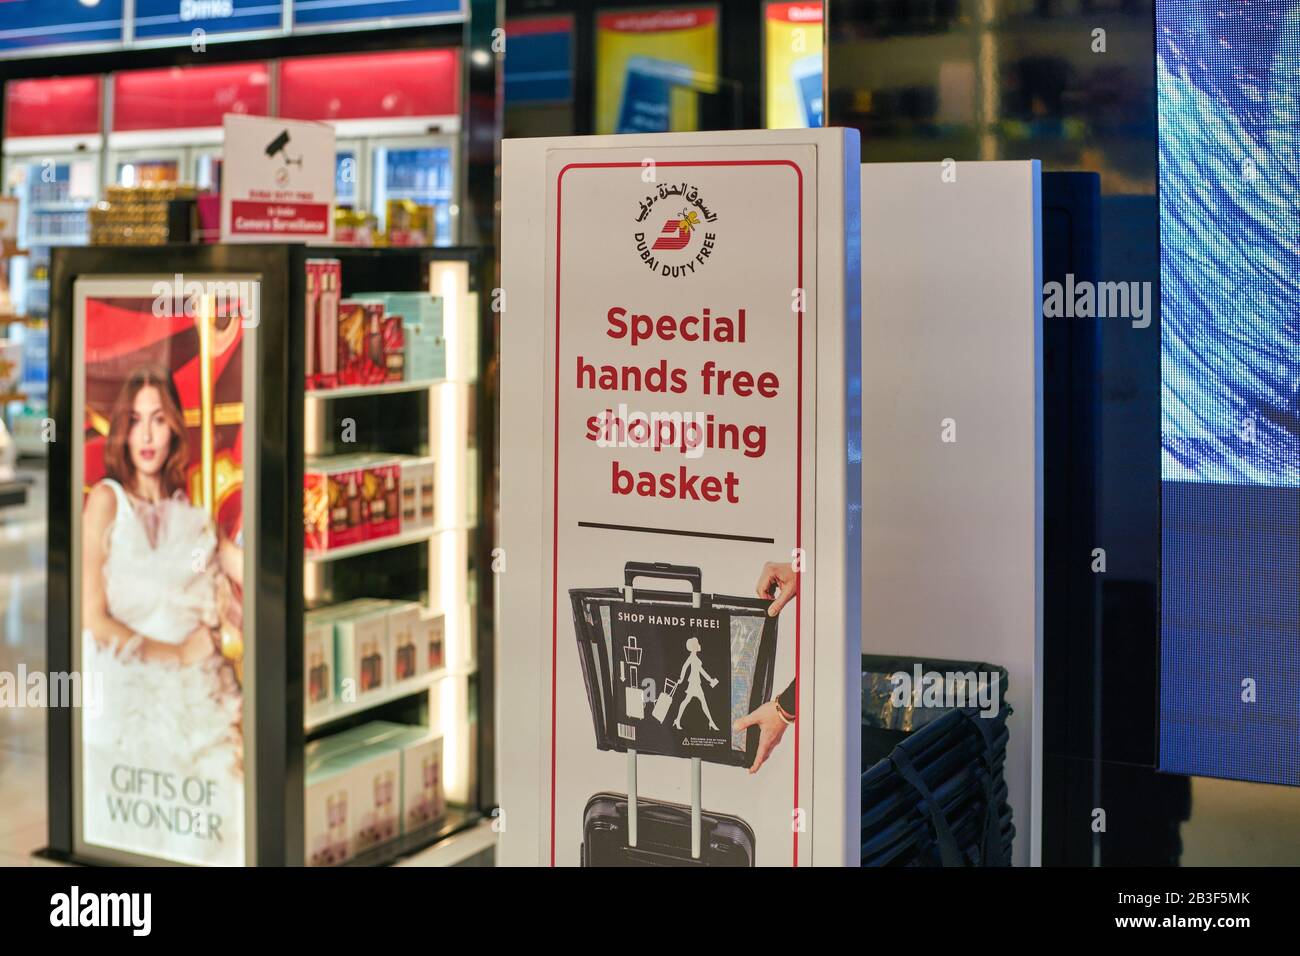 Dubai, VAE - CIRCA JANUAR 2019: Spezielles Hands-Freee-Warenkorbschild am Dubai International Airport zu sehen. Stockfoto